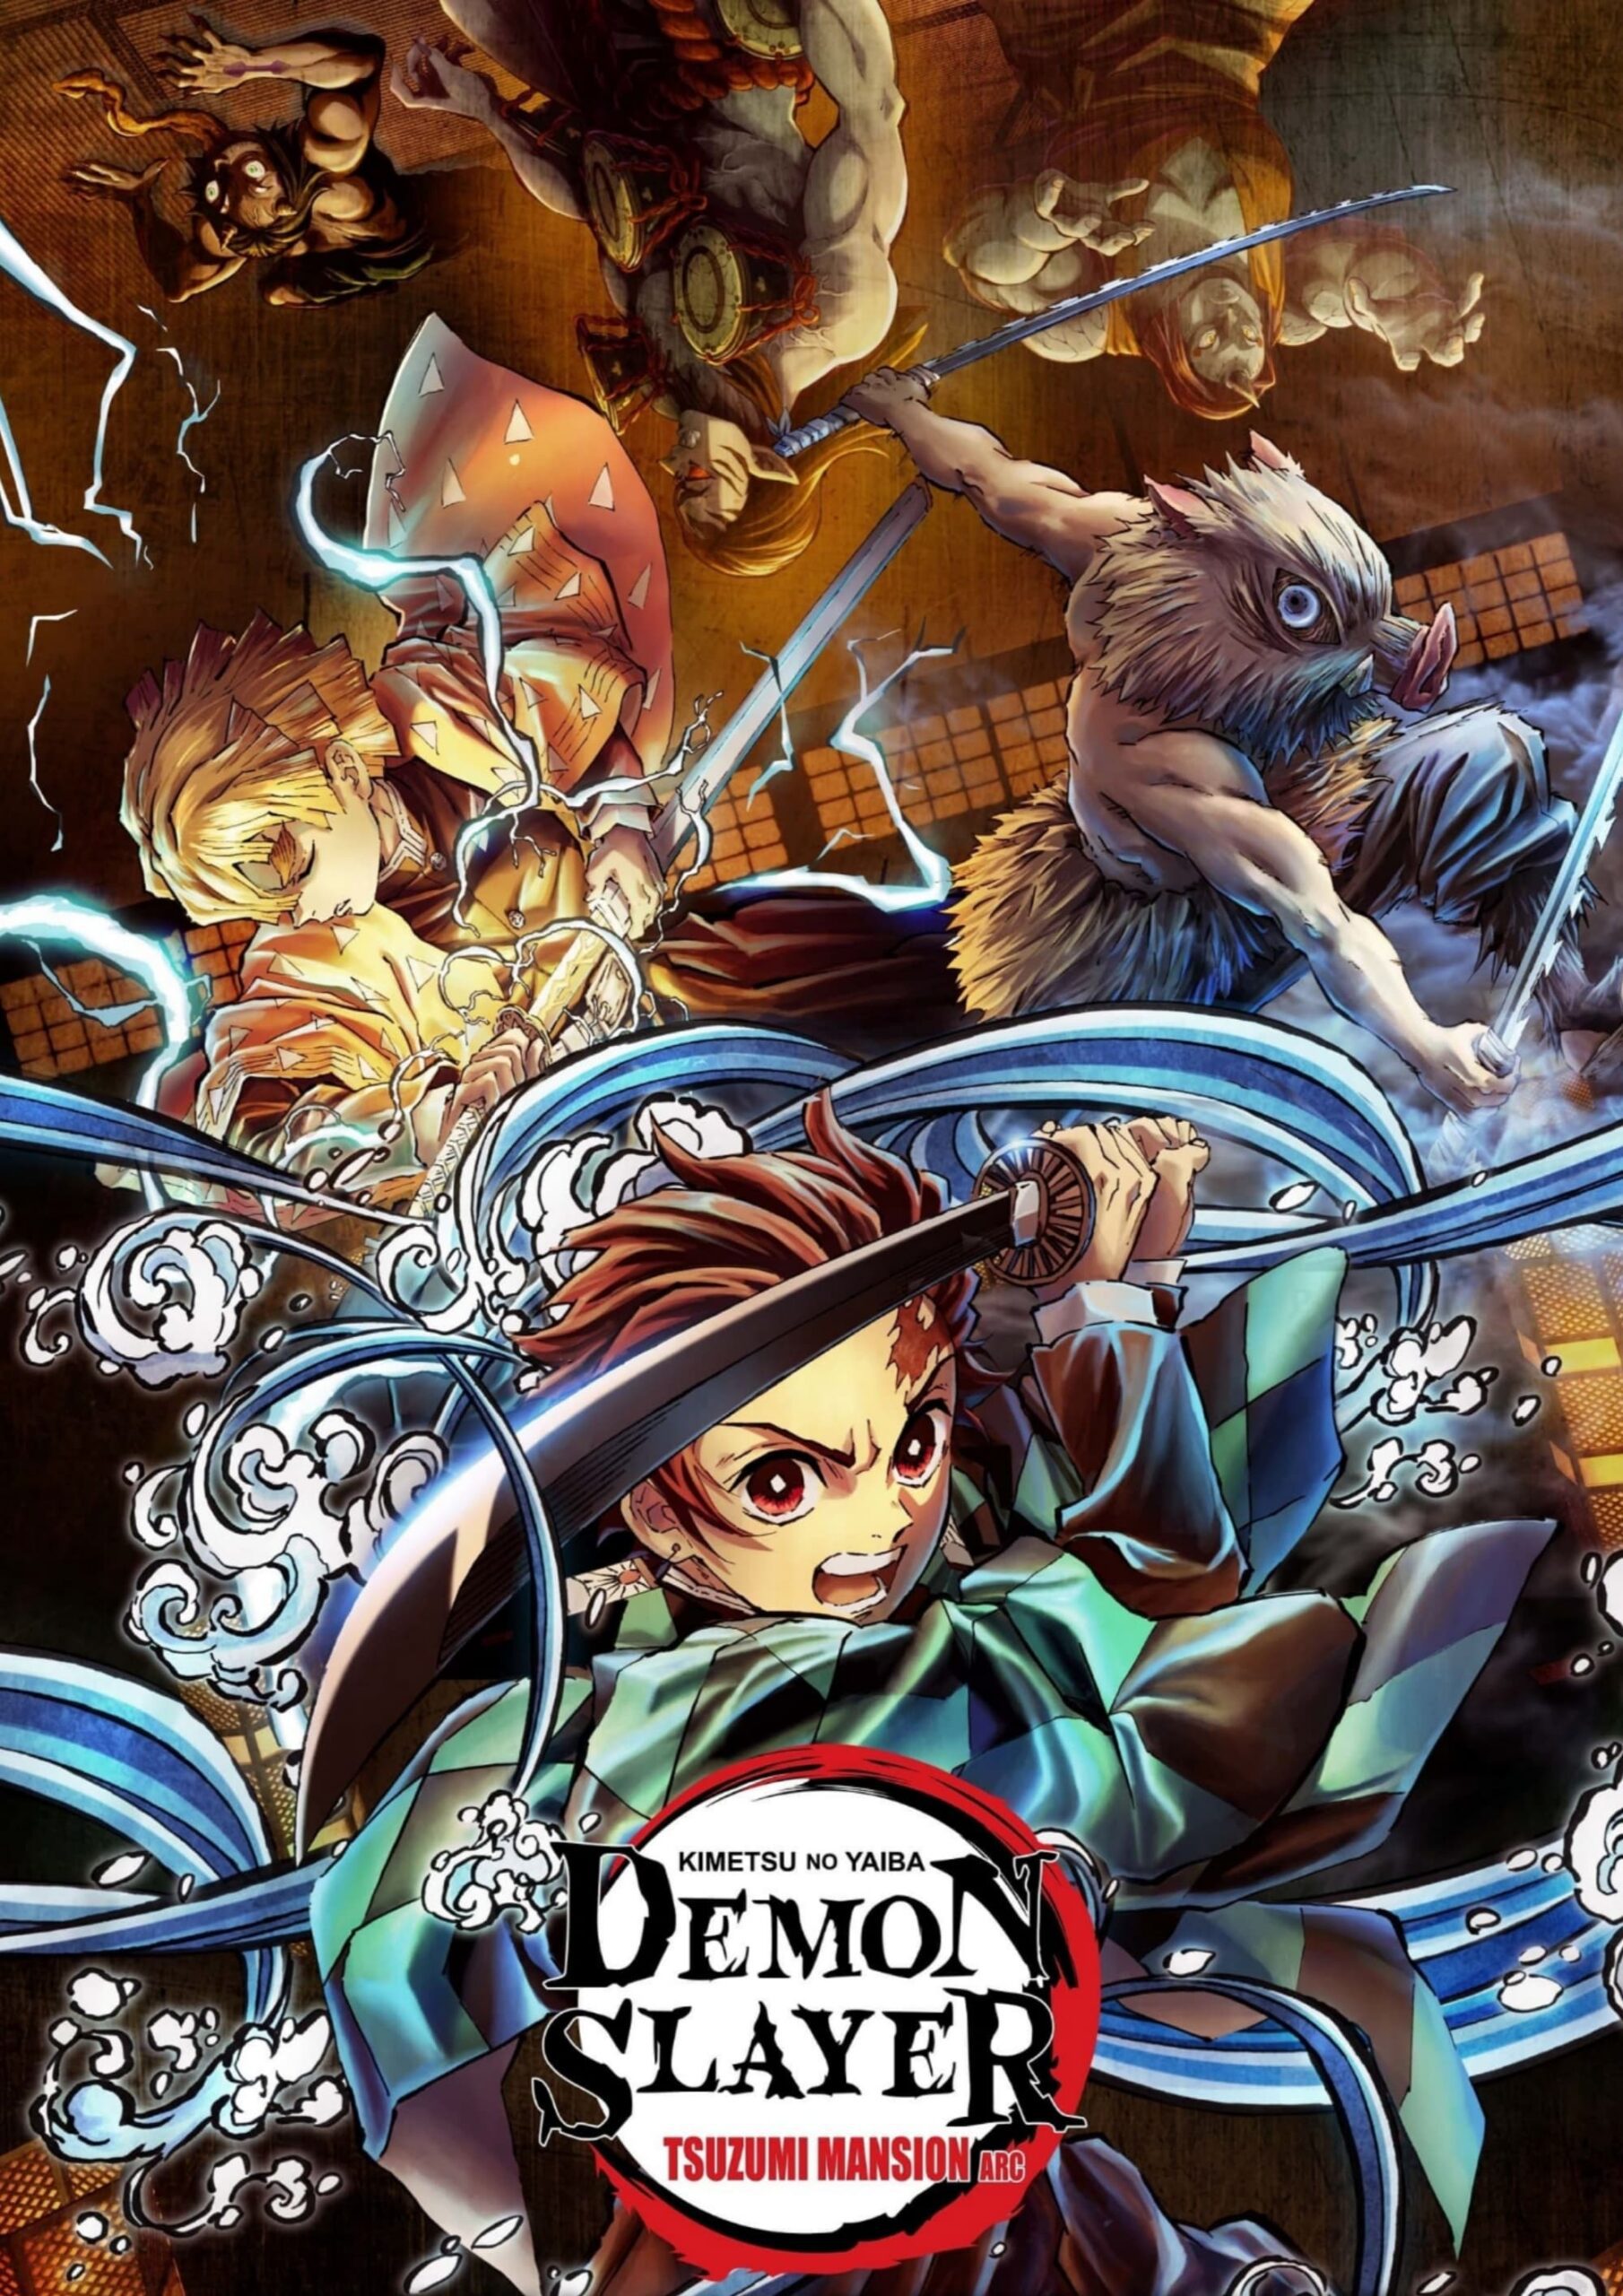 Demon Slayer: Kimetsu no Yaiba Anime Ufotable, Inc. 